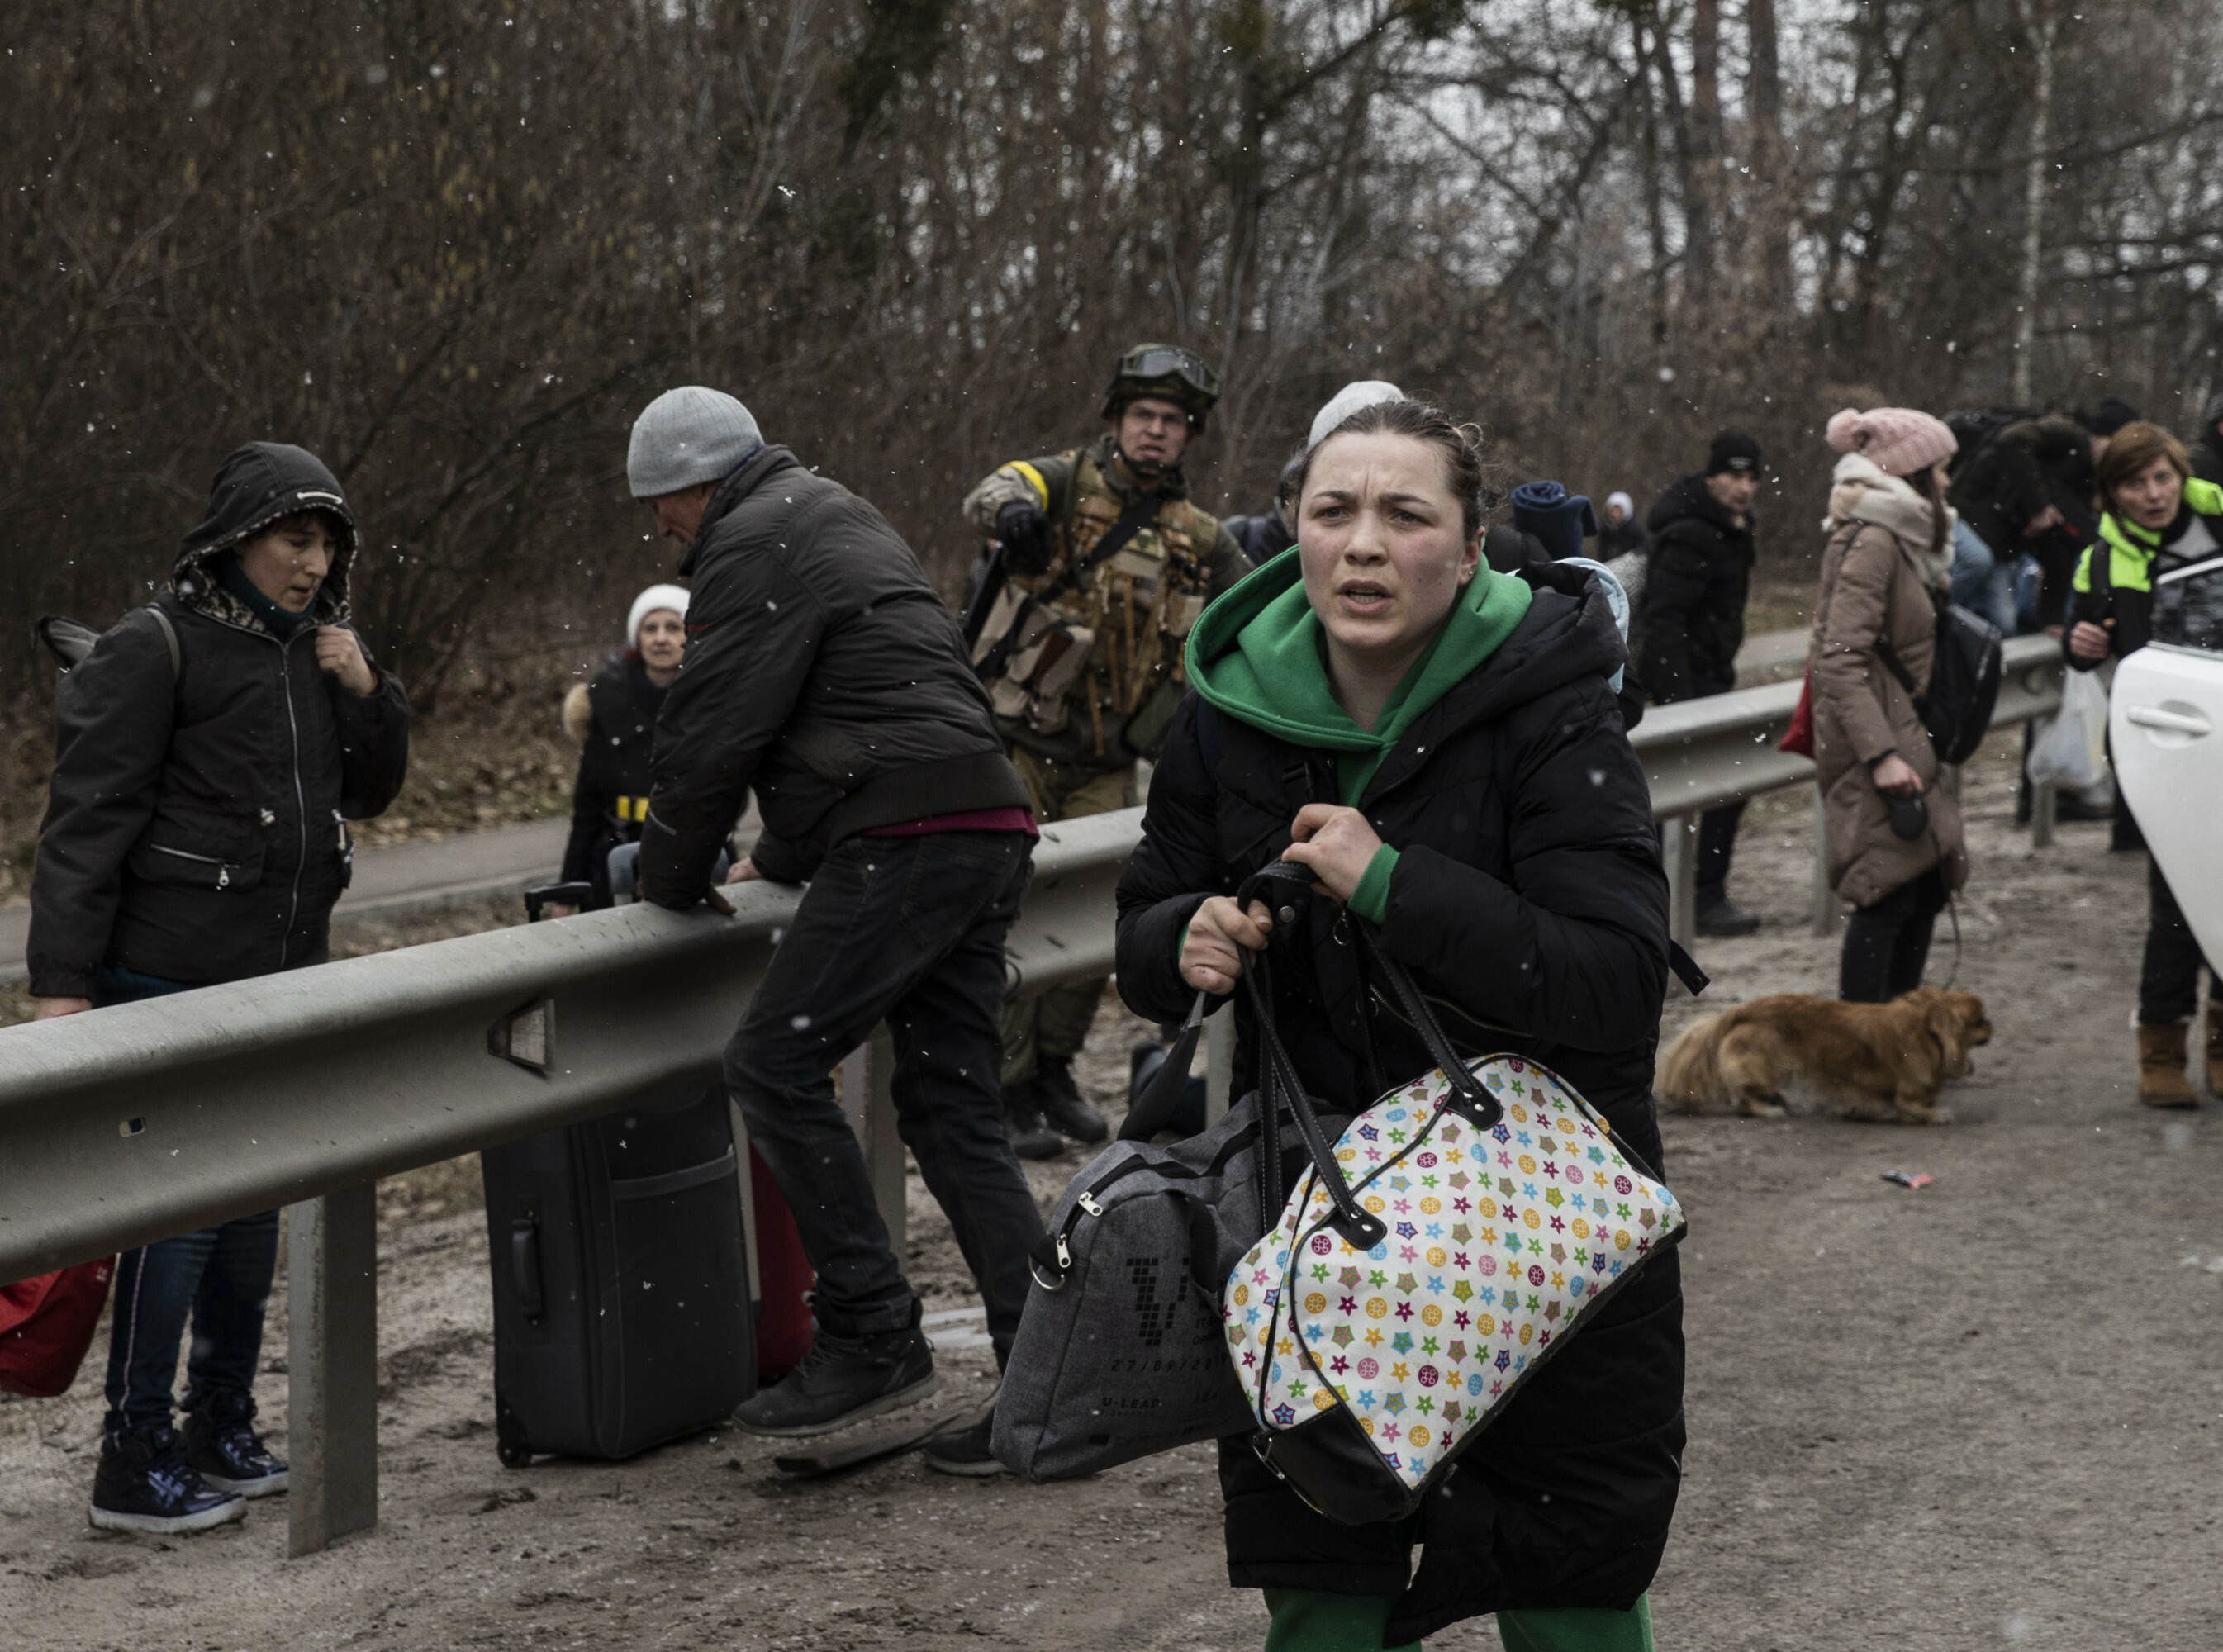 Ukrainian women confront hardest International Women's Day under shadow of Russian attacks